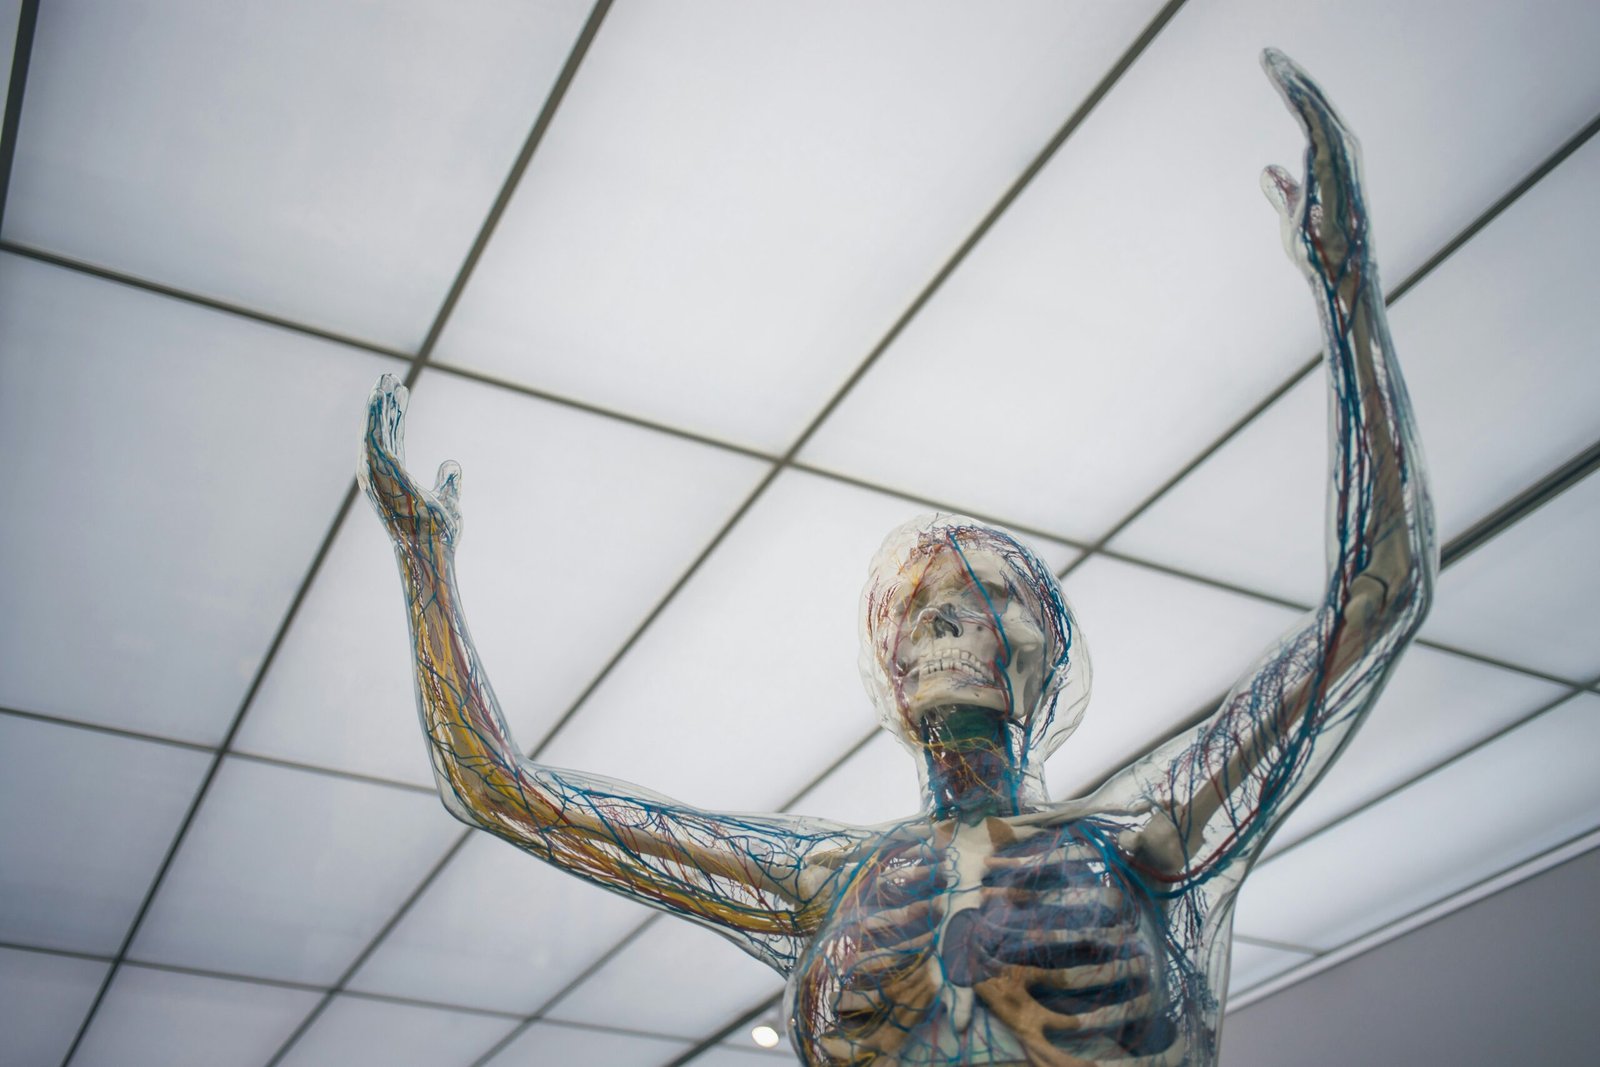 Nervous System
human body sculpture